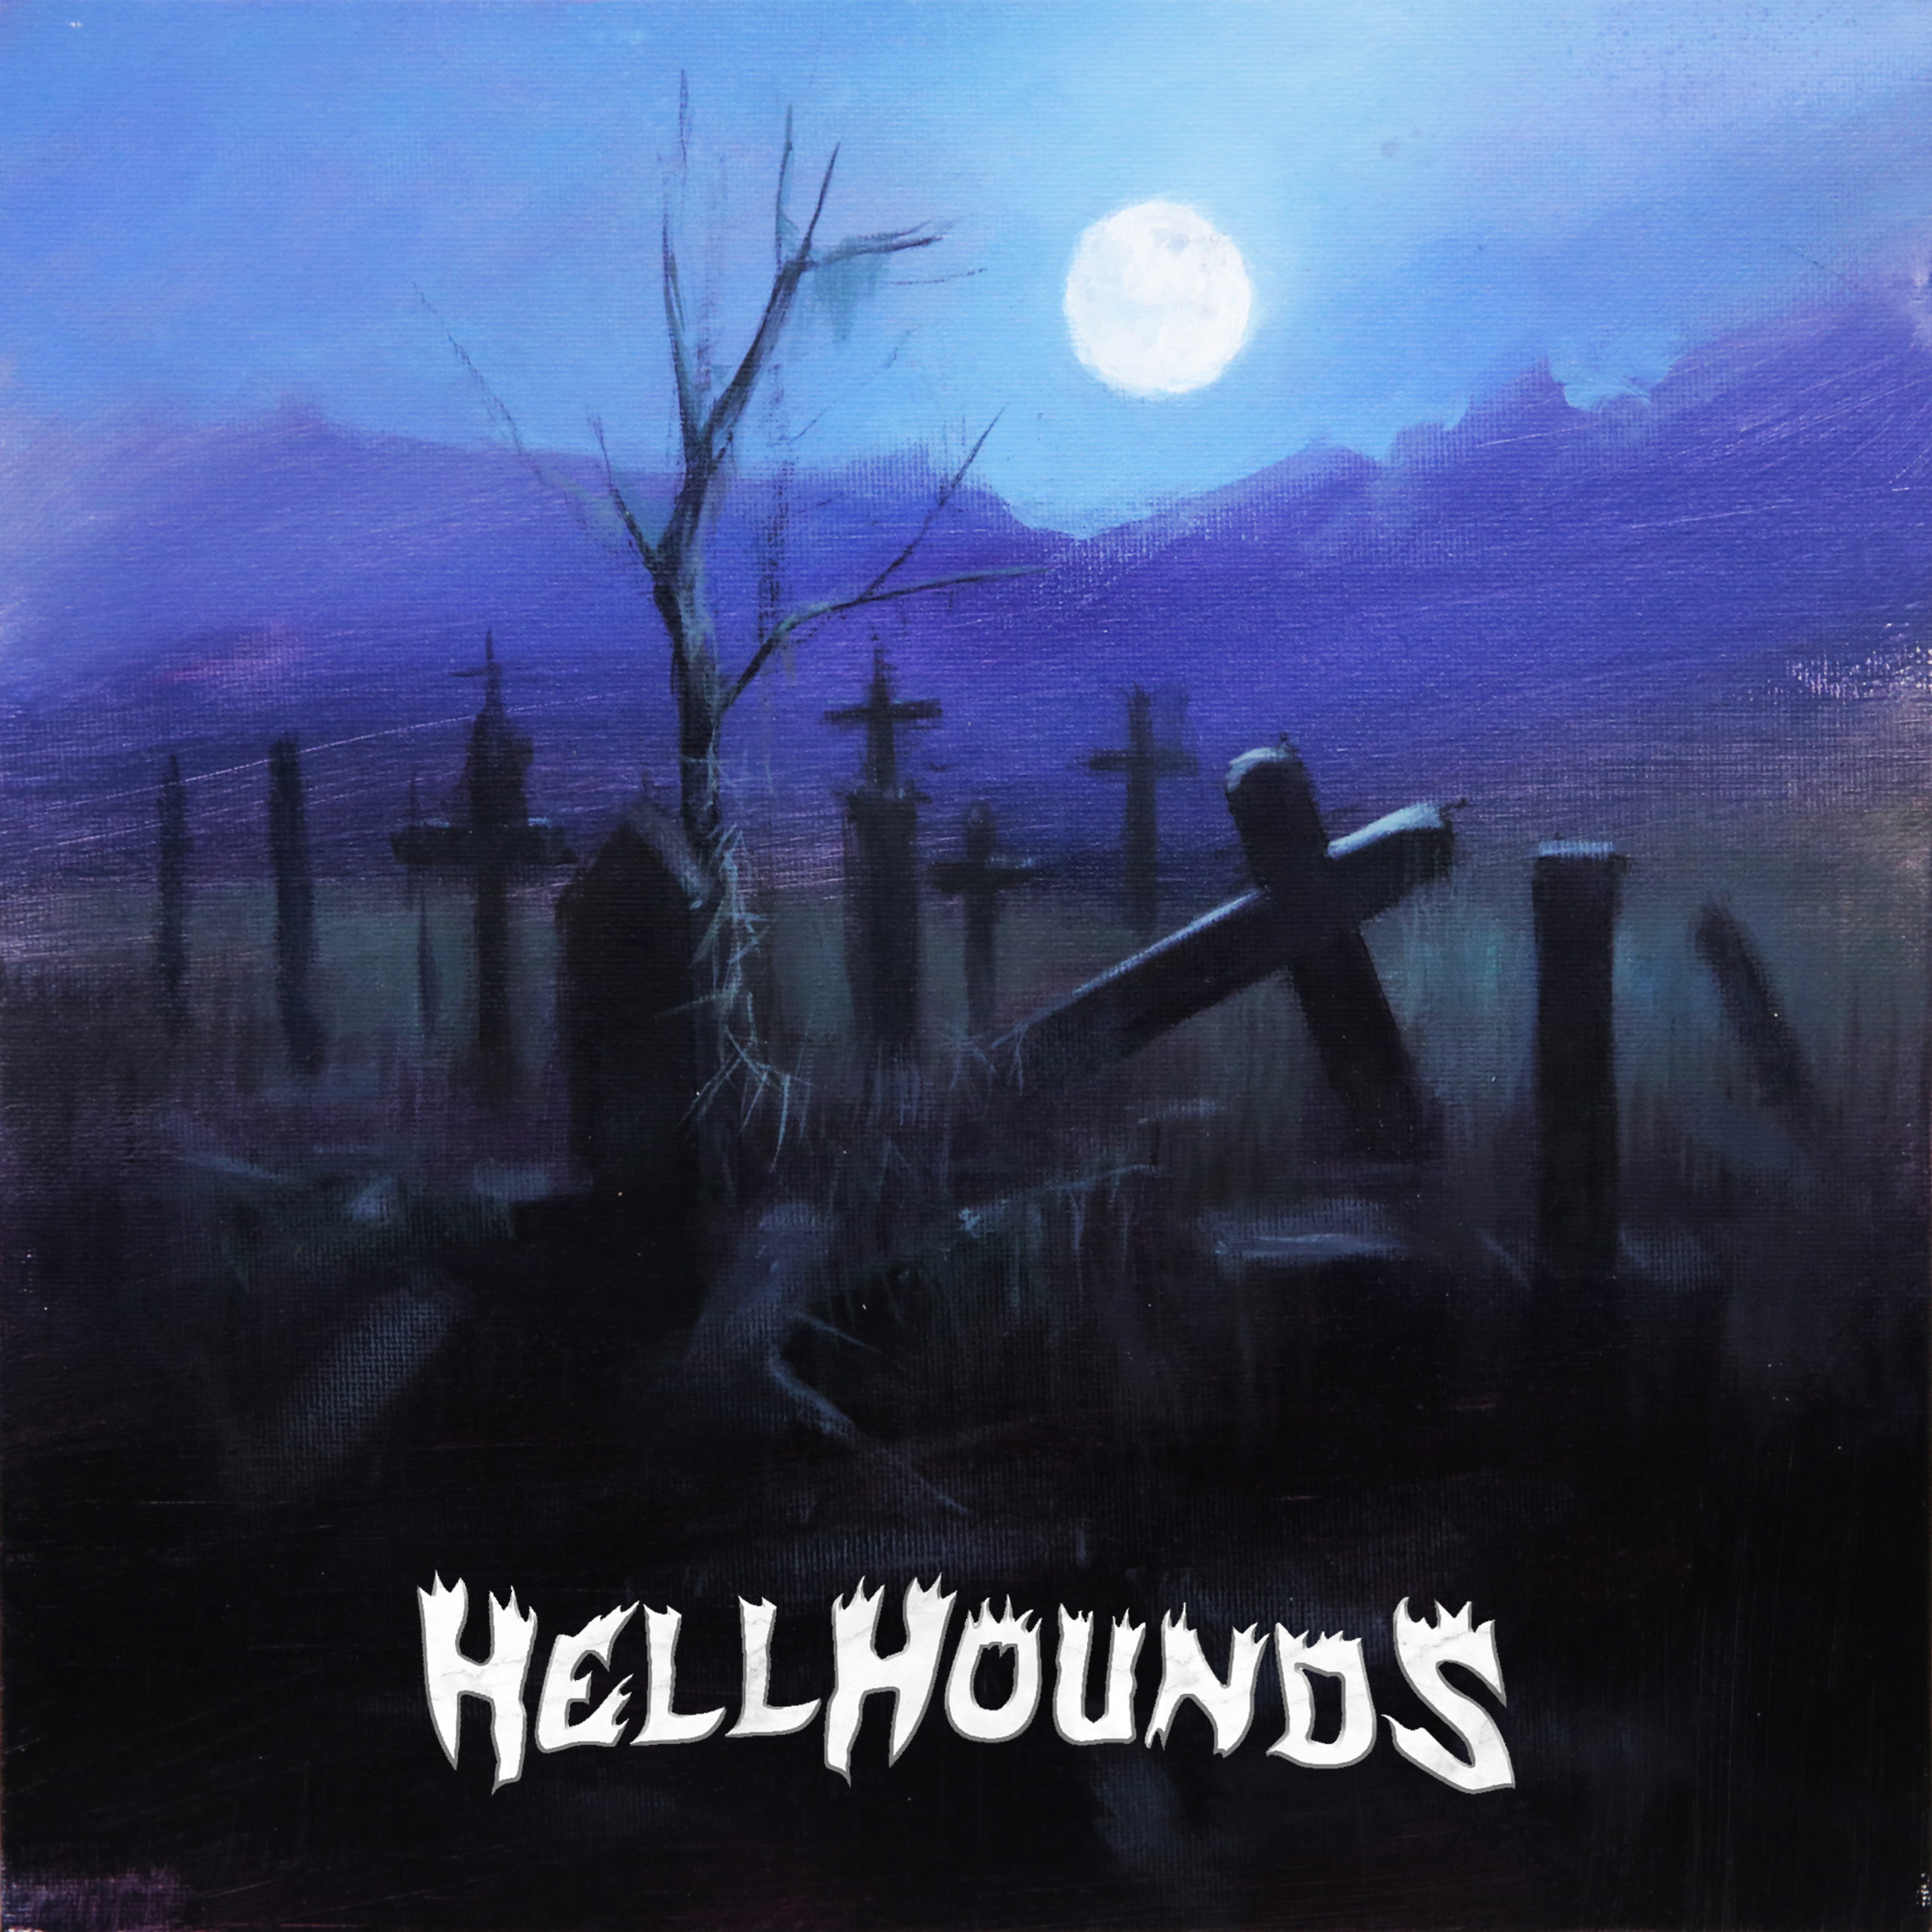 La banda sevillana HellHounds presenta su primer disco homónimo